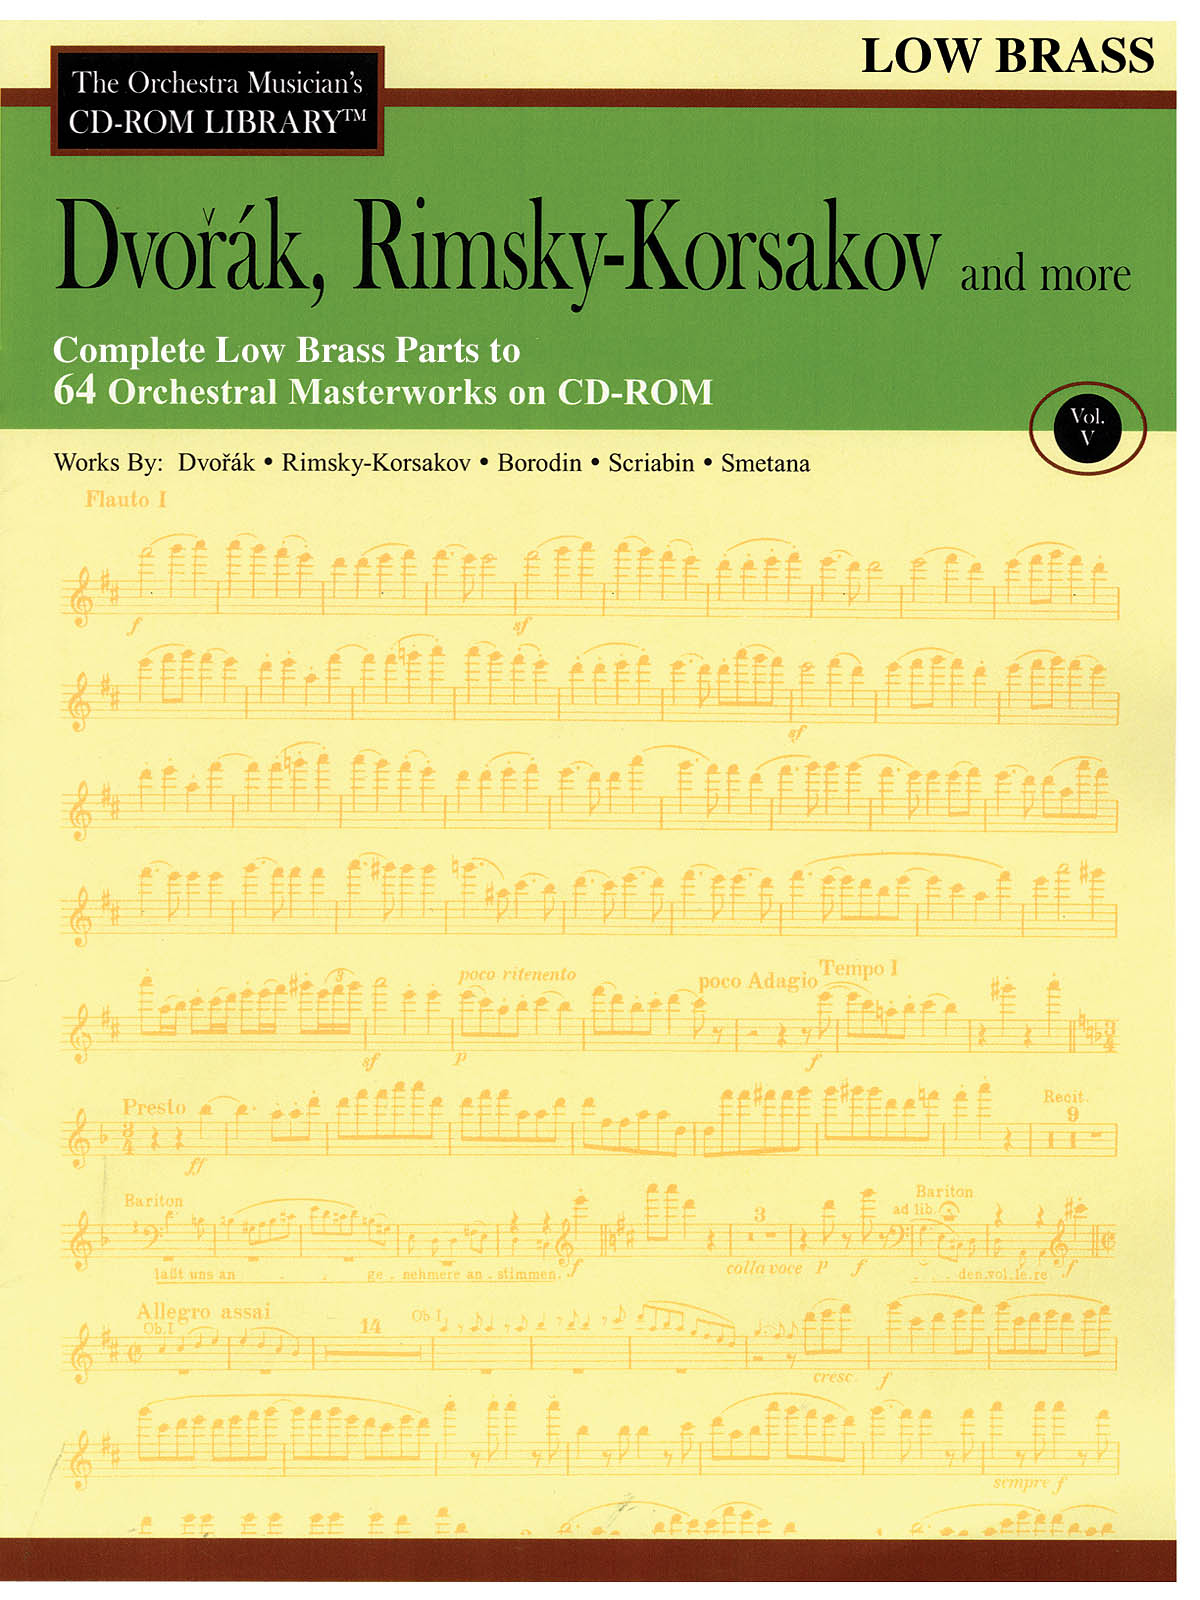 Dvorak, Rimsky-Korsakov and More - Volume 5(The Orchestra Musician's CD-ROM Library - Low Brass)